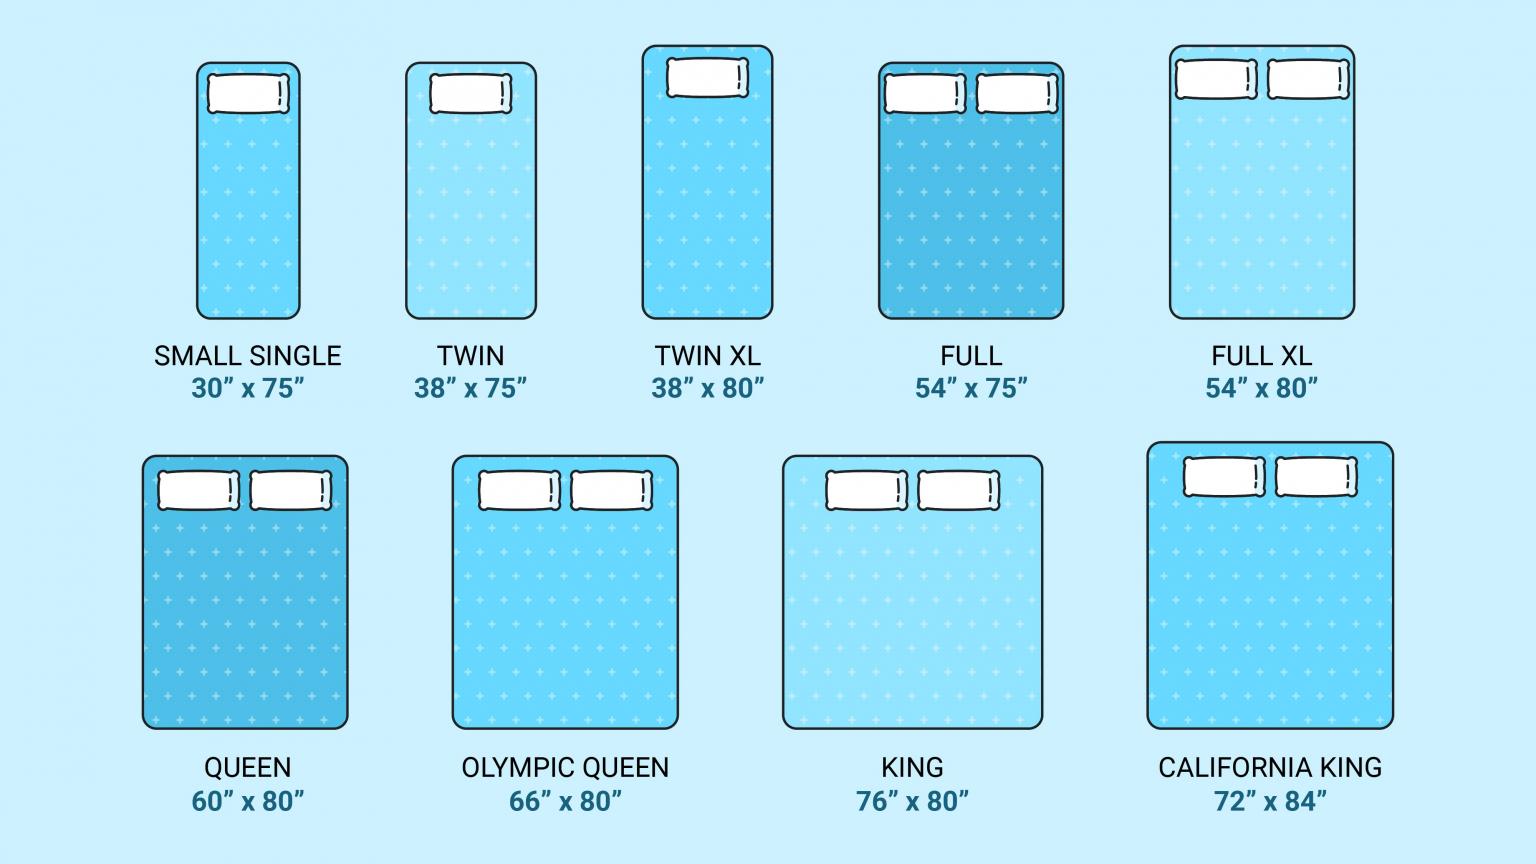 average weight of queen mattress